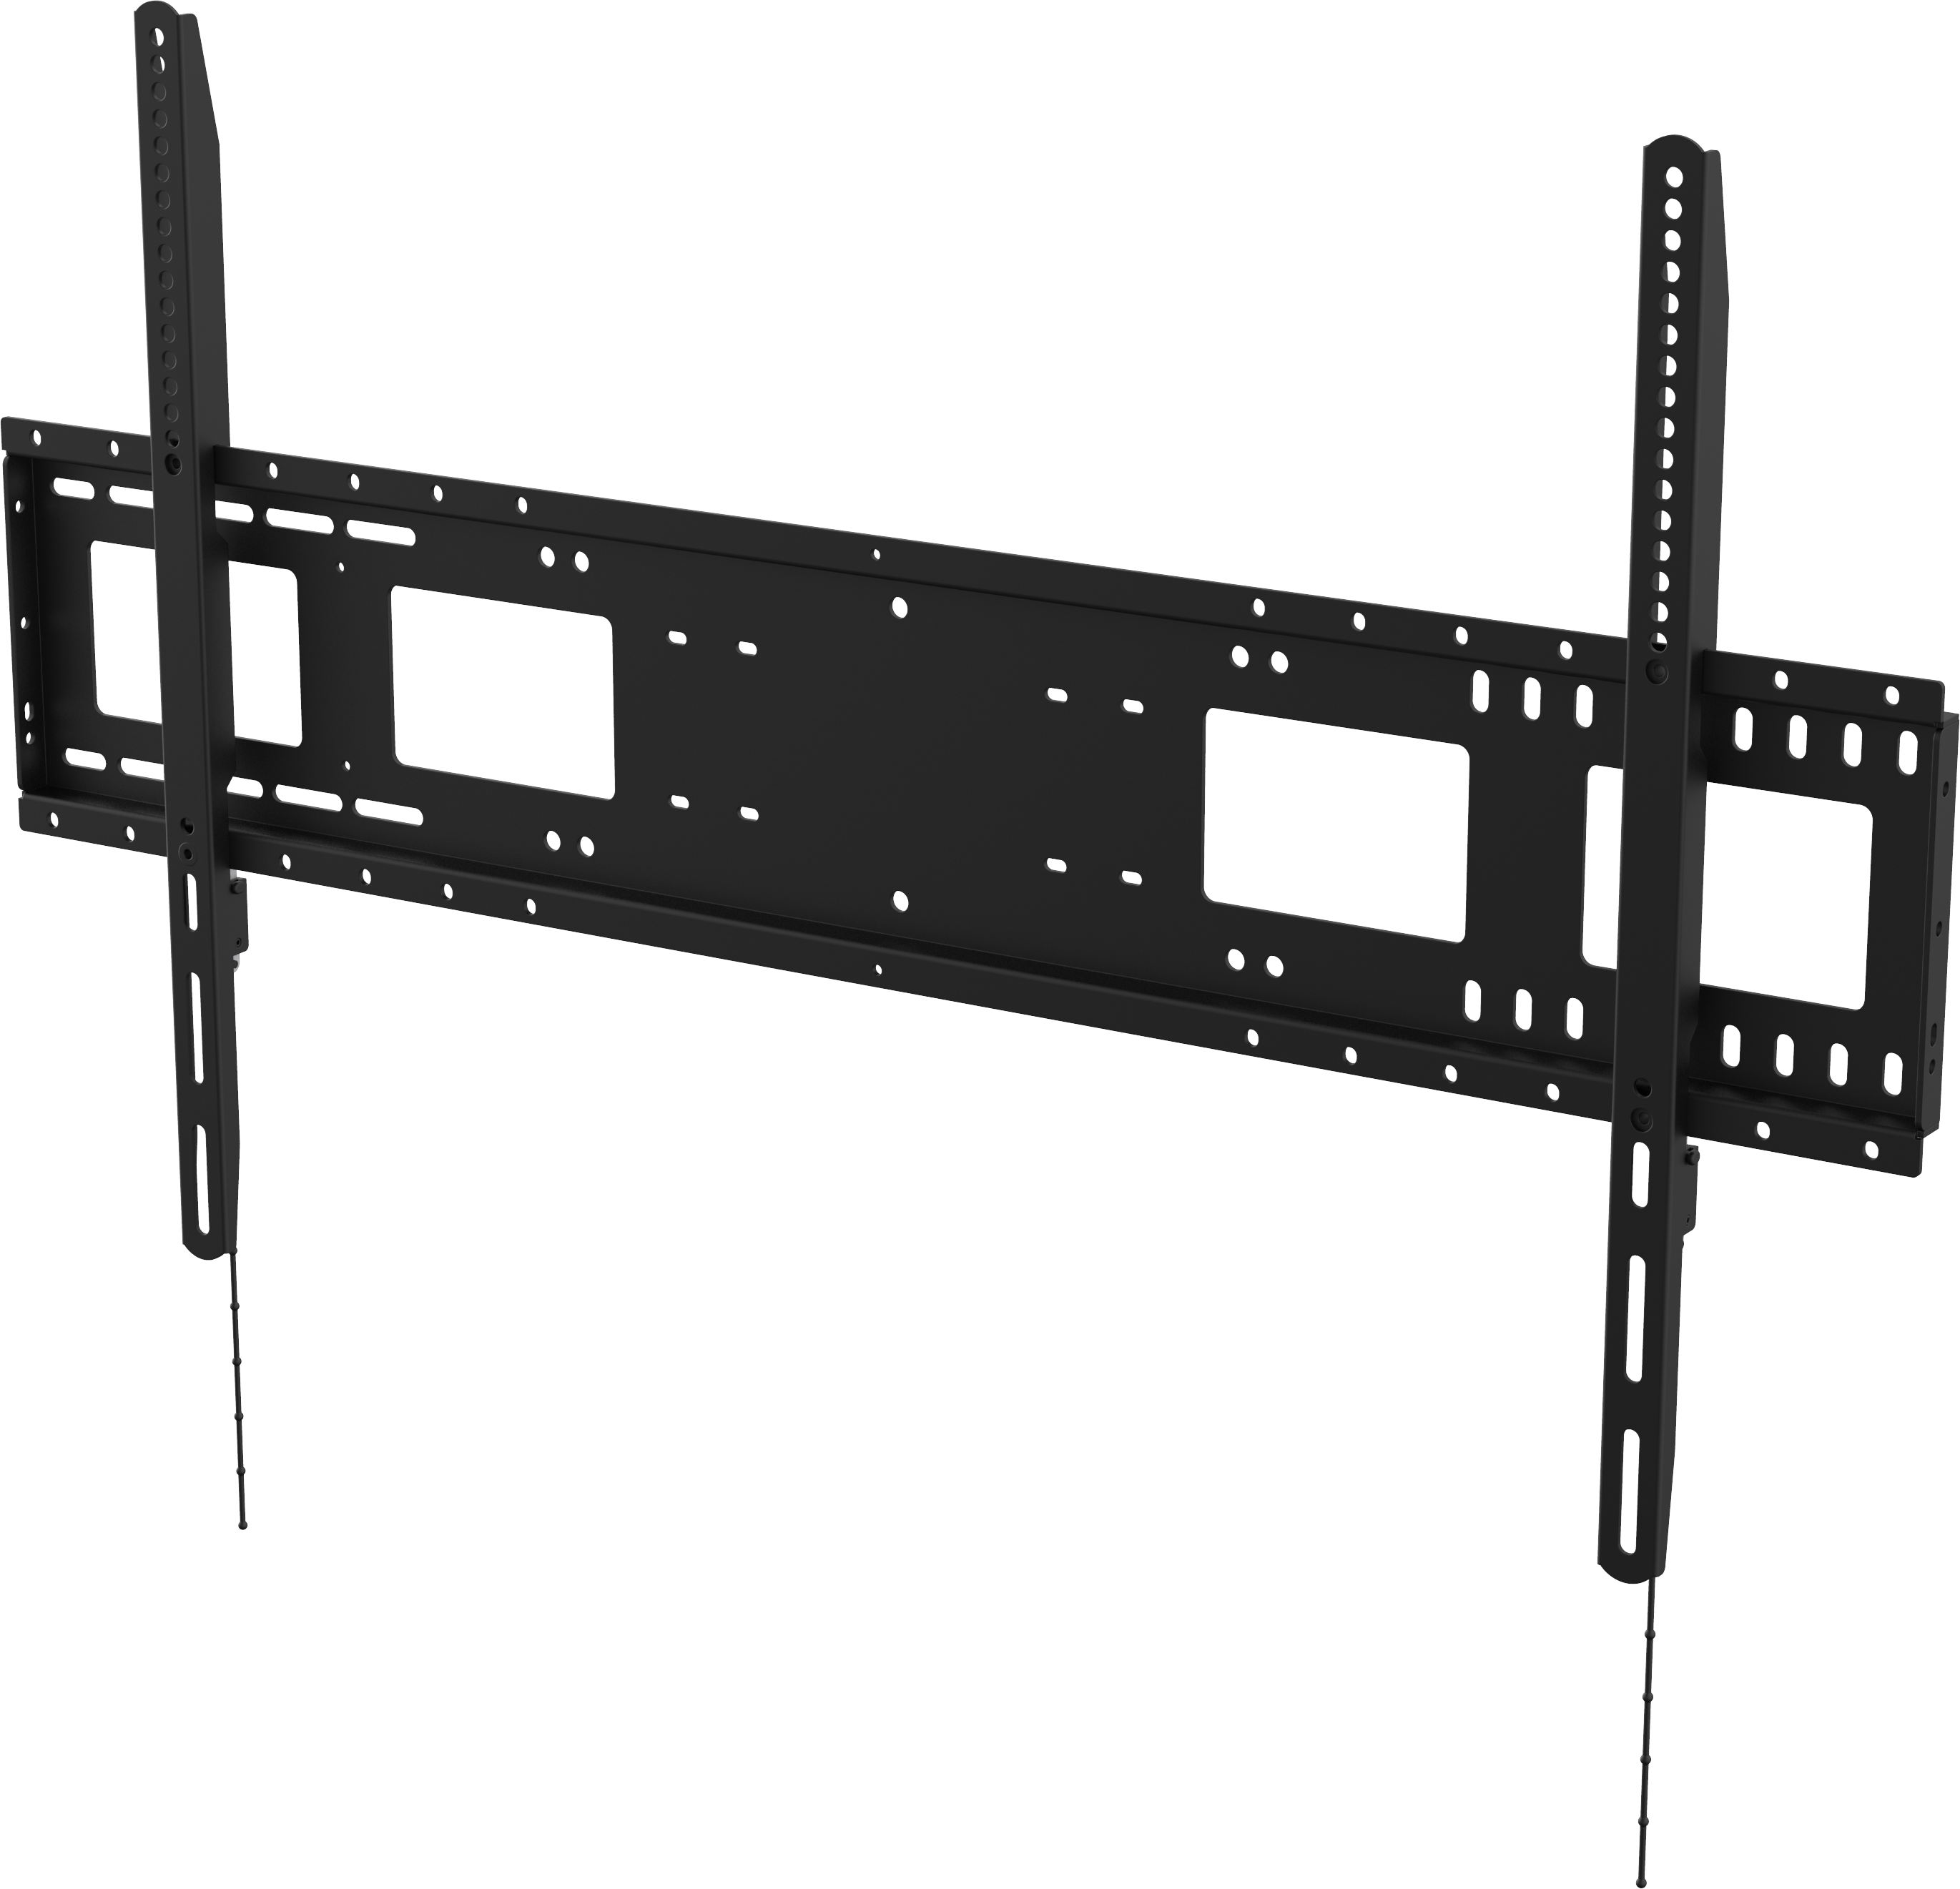 An image showing Robuuste wandbeugel voor flatscreens 1000 × 600